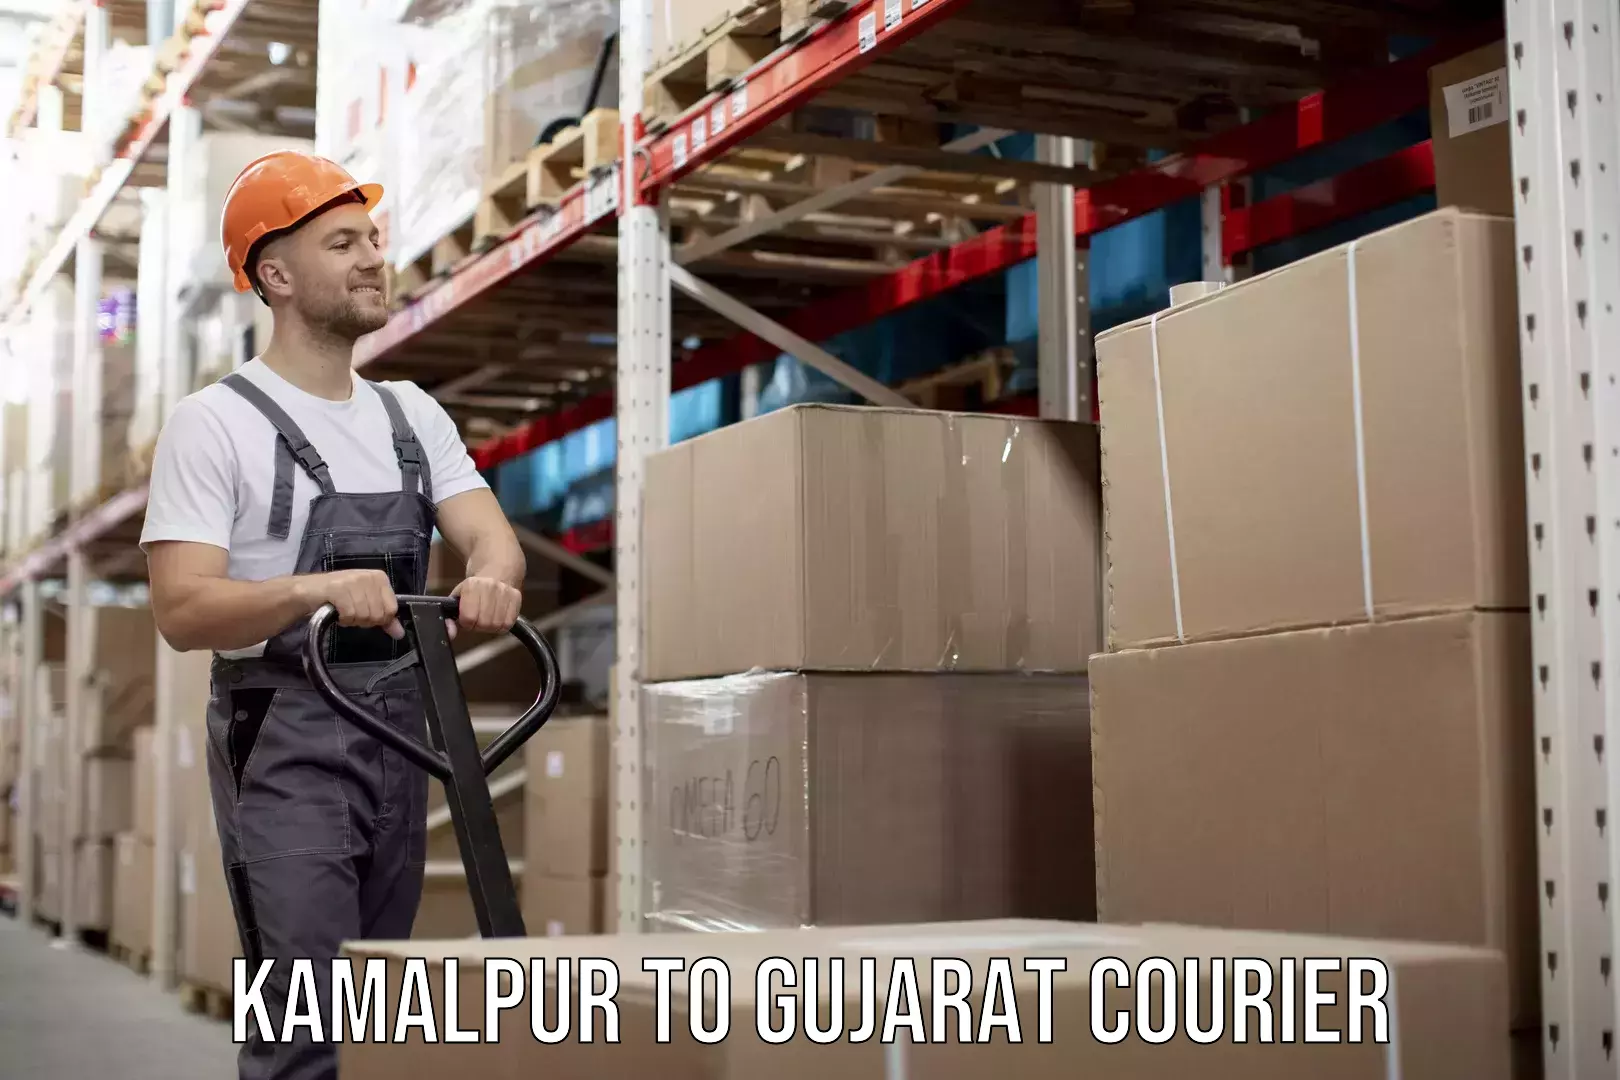 Advanced tracking systems Kamalpur to Gujarat